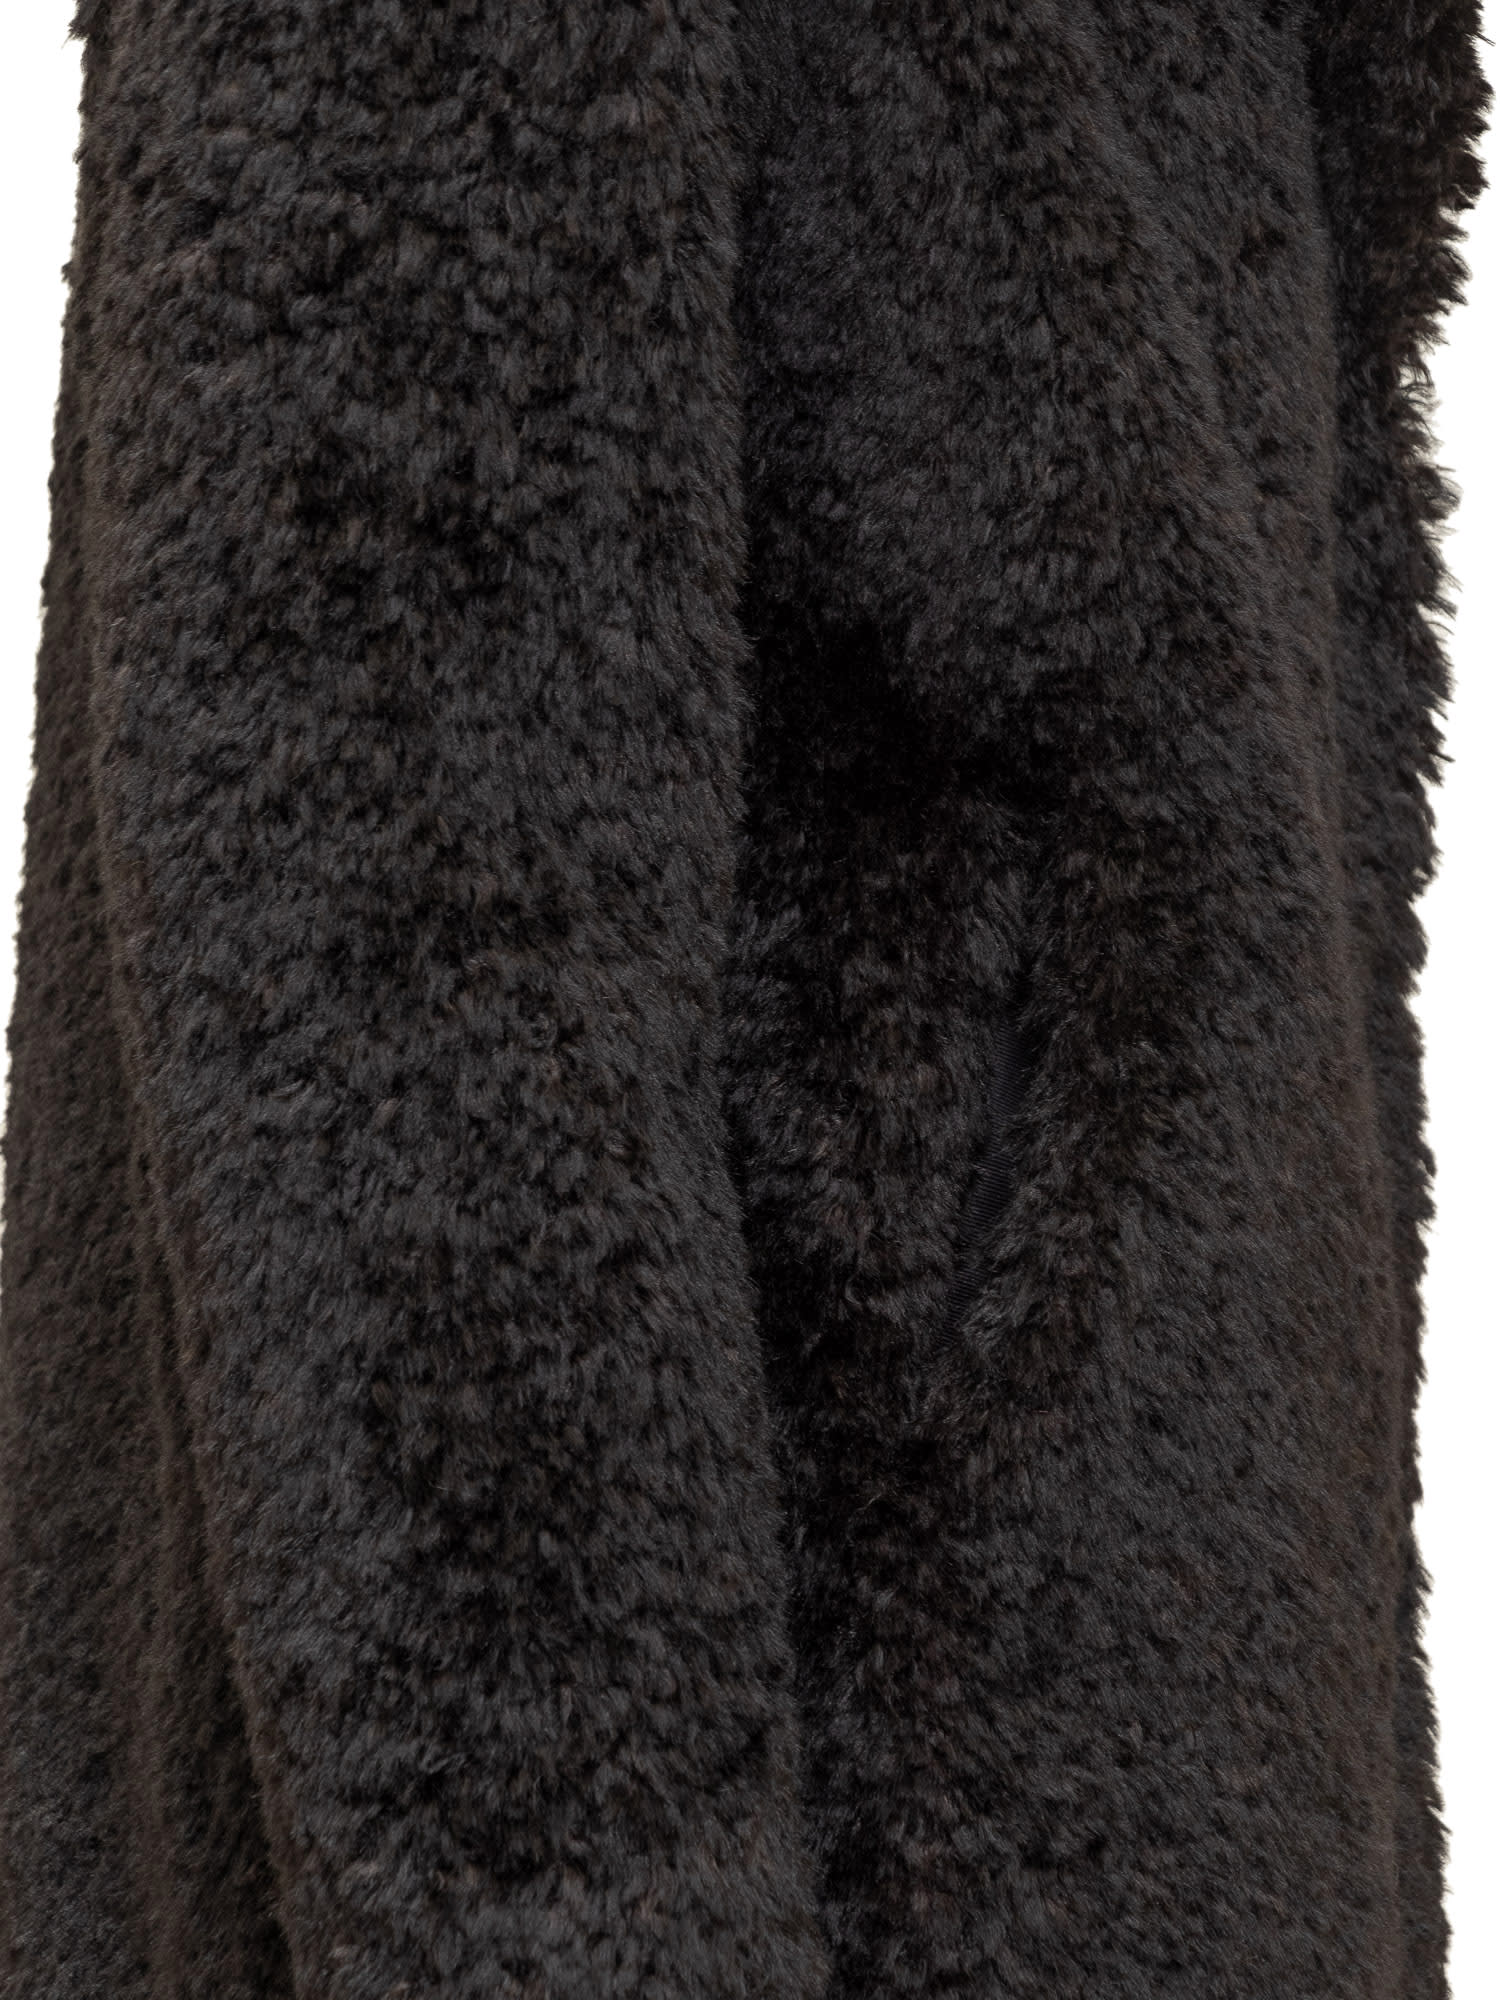 Shop Herno Fur Coat In Nero